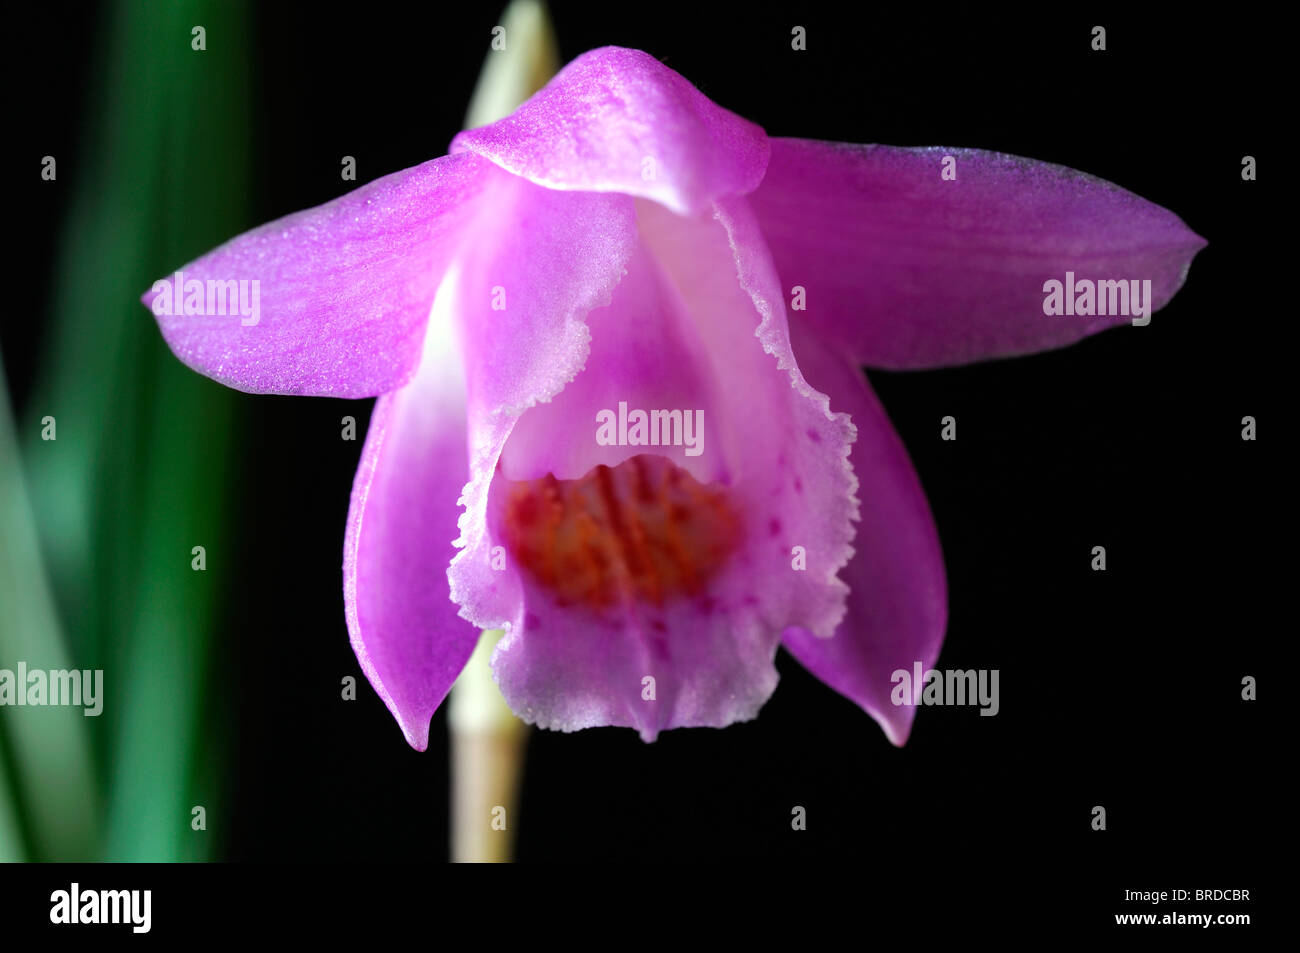 Pleione scopulorum windowsill orchid flower plant pink purple set contrast contrasted black background Stock Photo